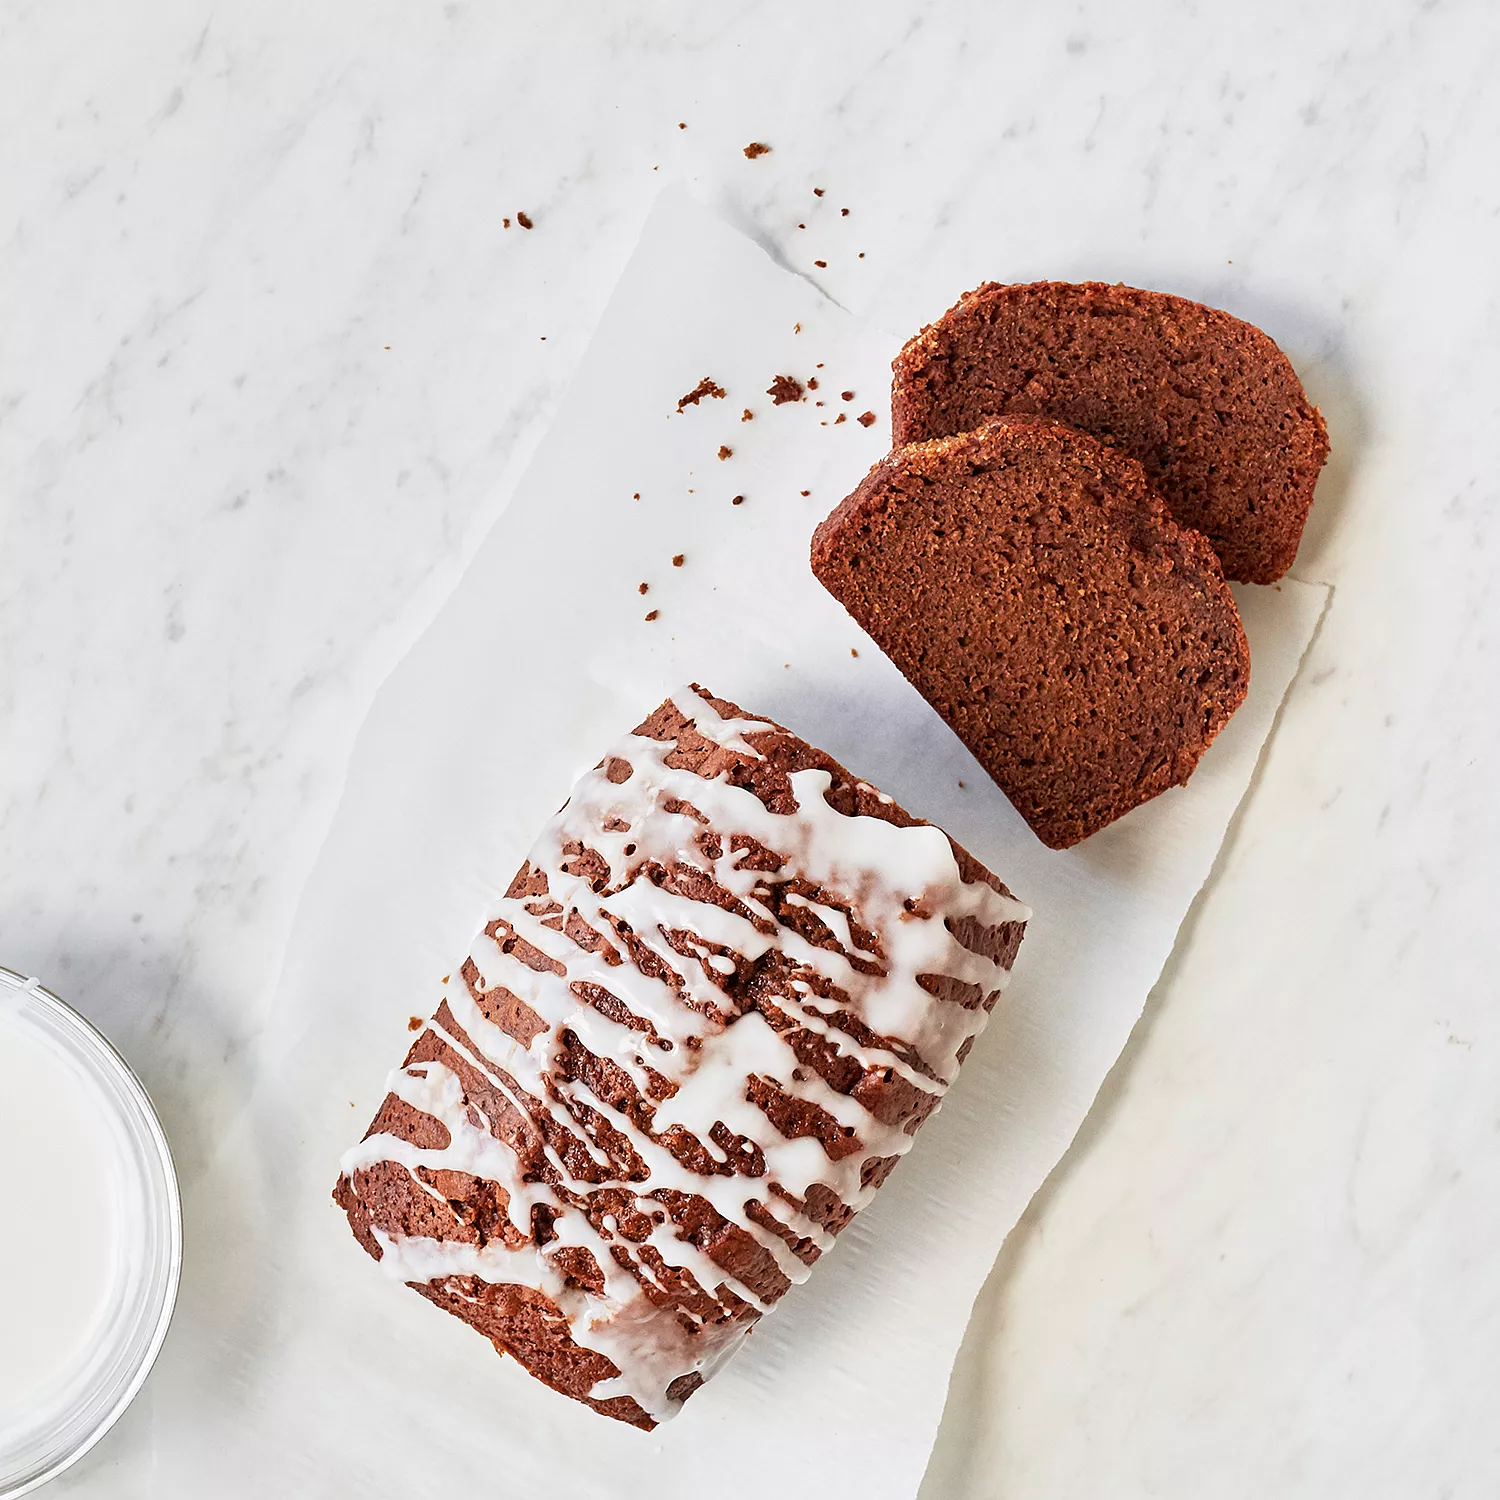 Sur La Table Gingerbread Loaf Mix with Vanilla Glaze